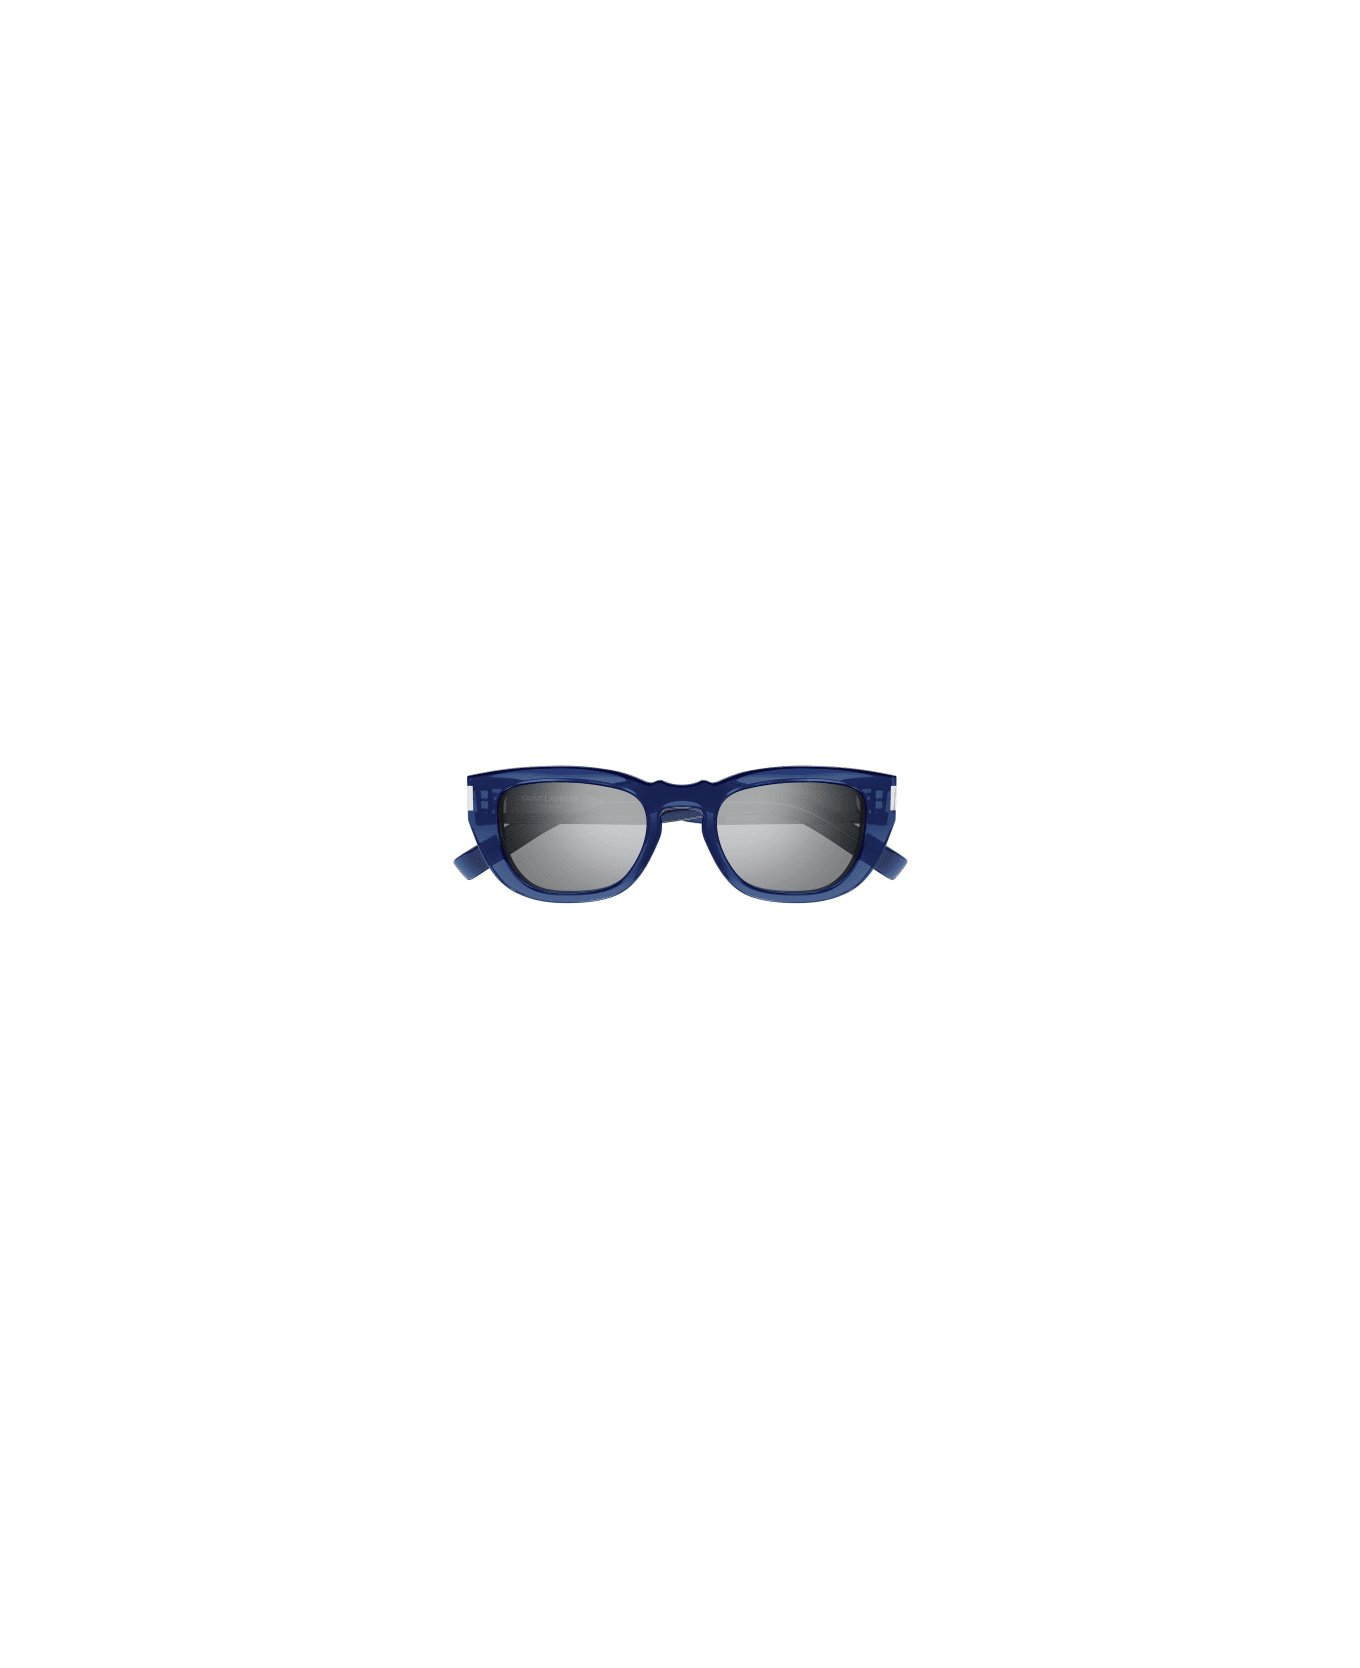 Saint Laurent Eyewear SL 601 Sunglasses - Blue Blue Silver